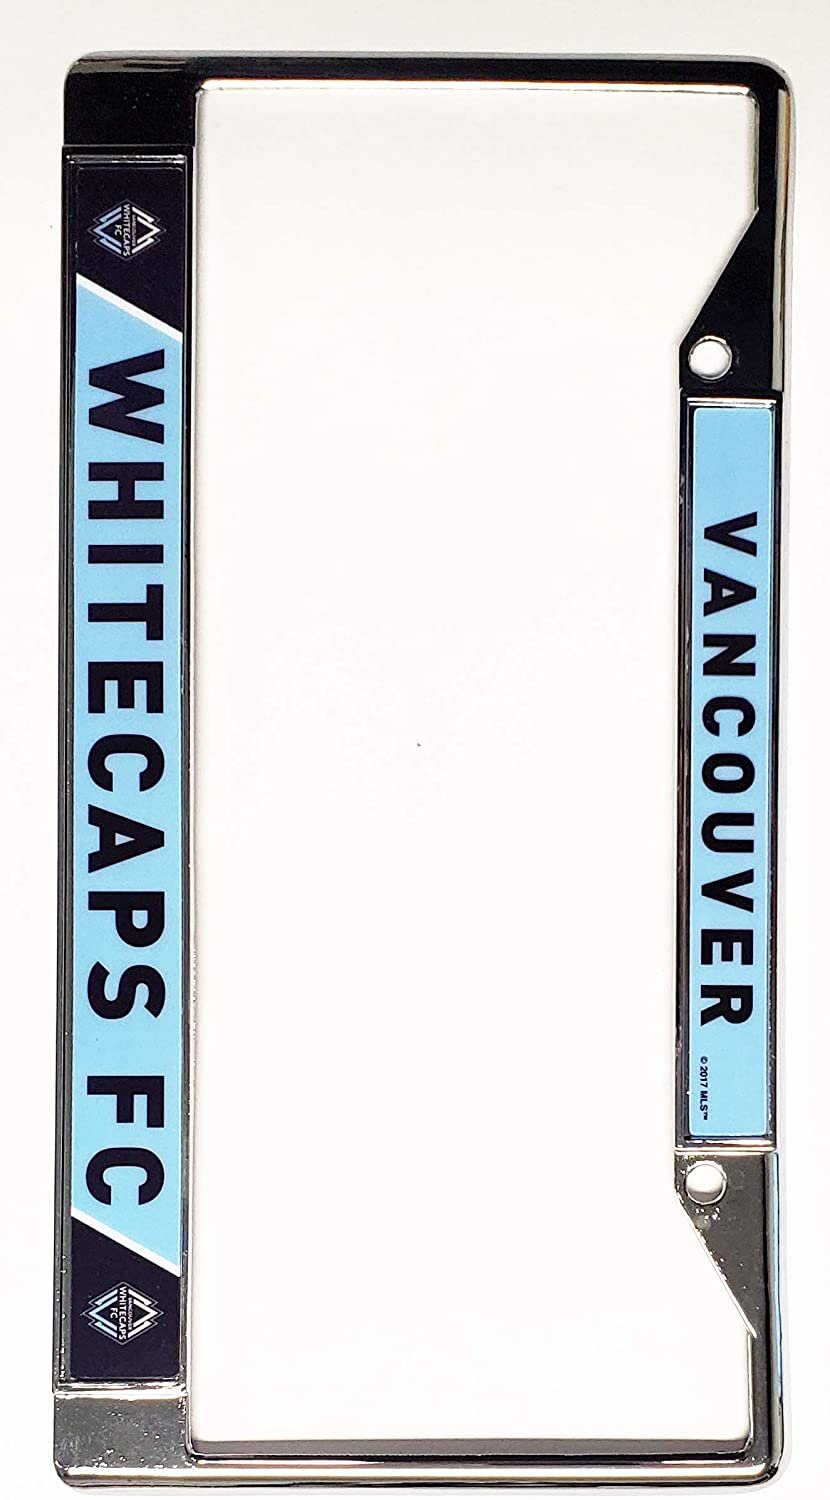 Vancouver Whitecaps MLS Premium Metal License License Plate Frame Chrome Tag Cover, 12x6 Inch